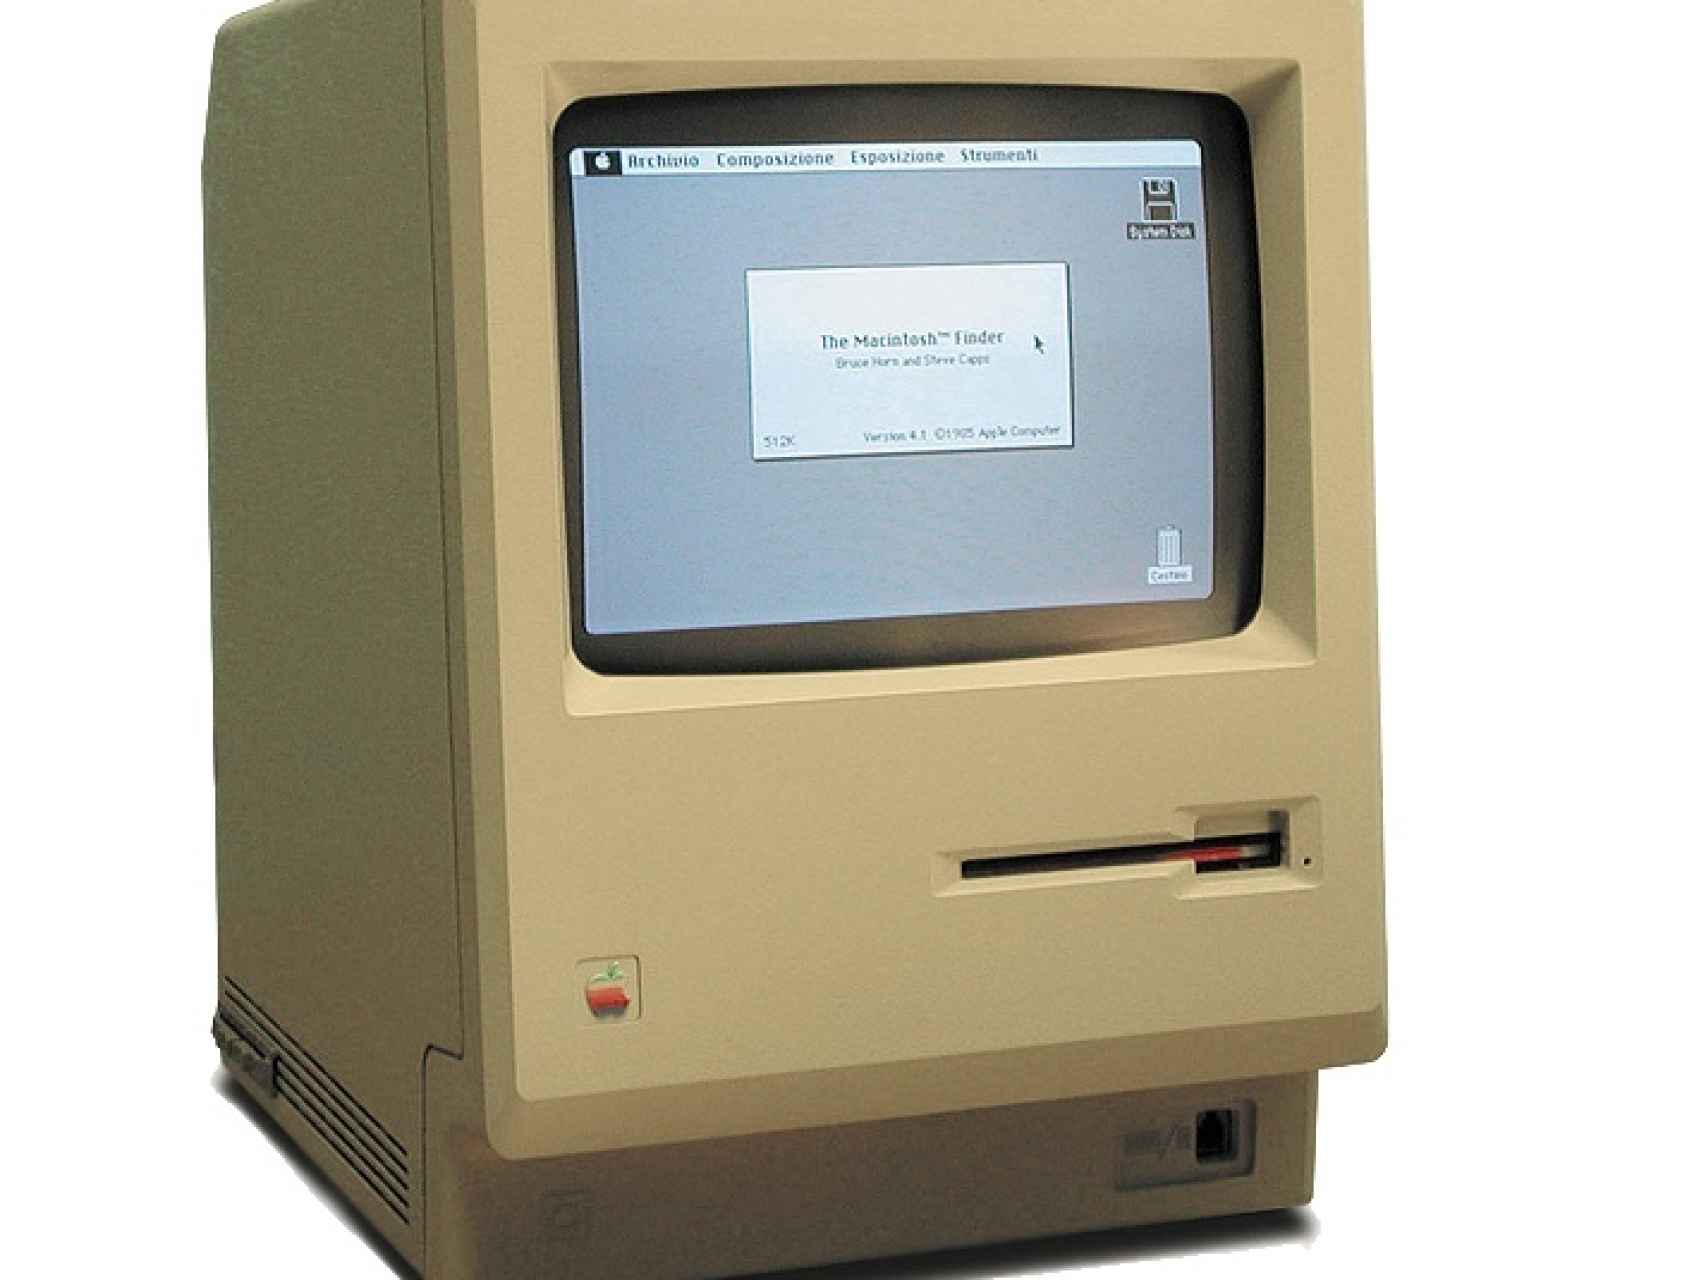 Macintosh 128K.